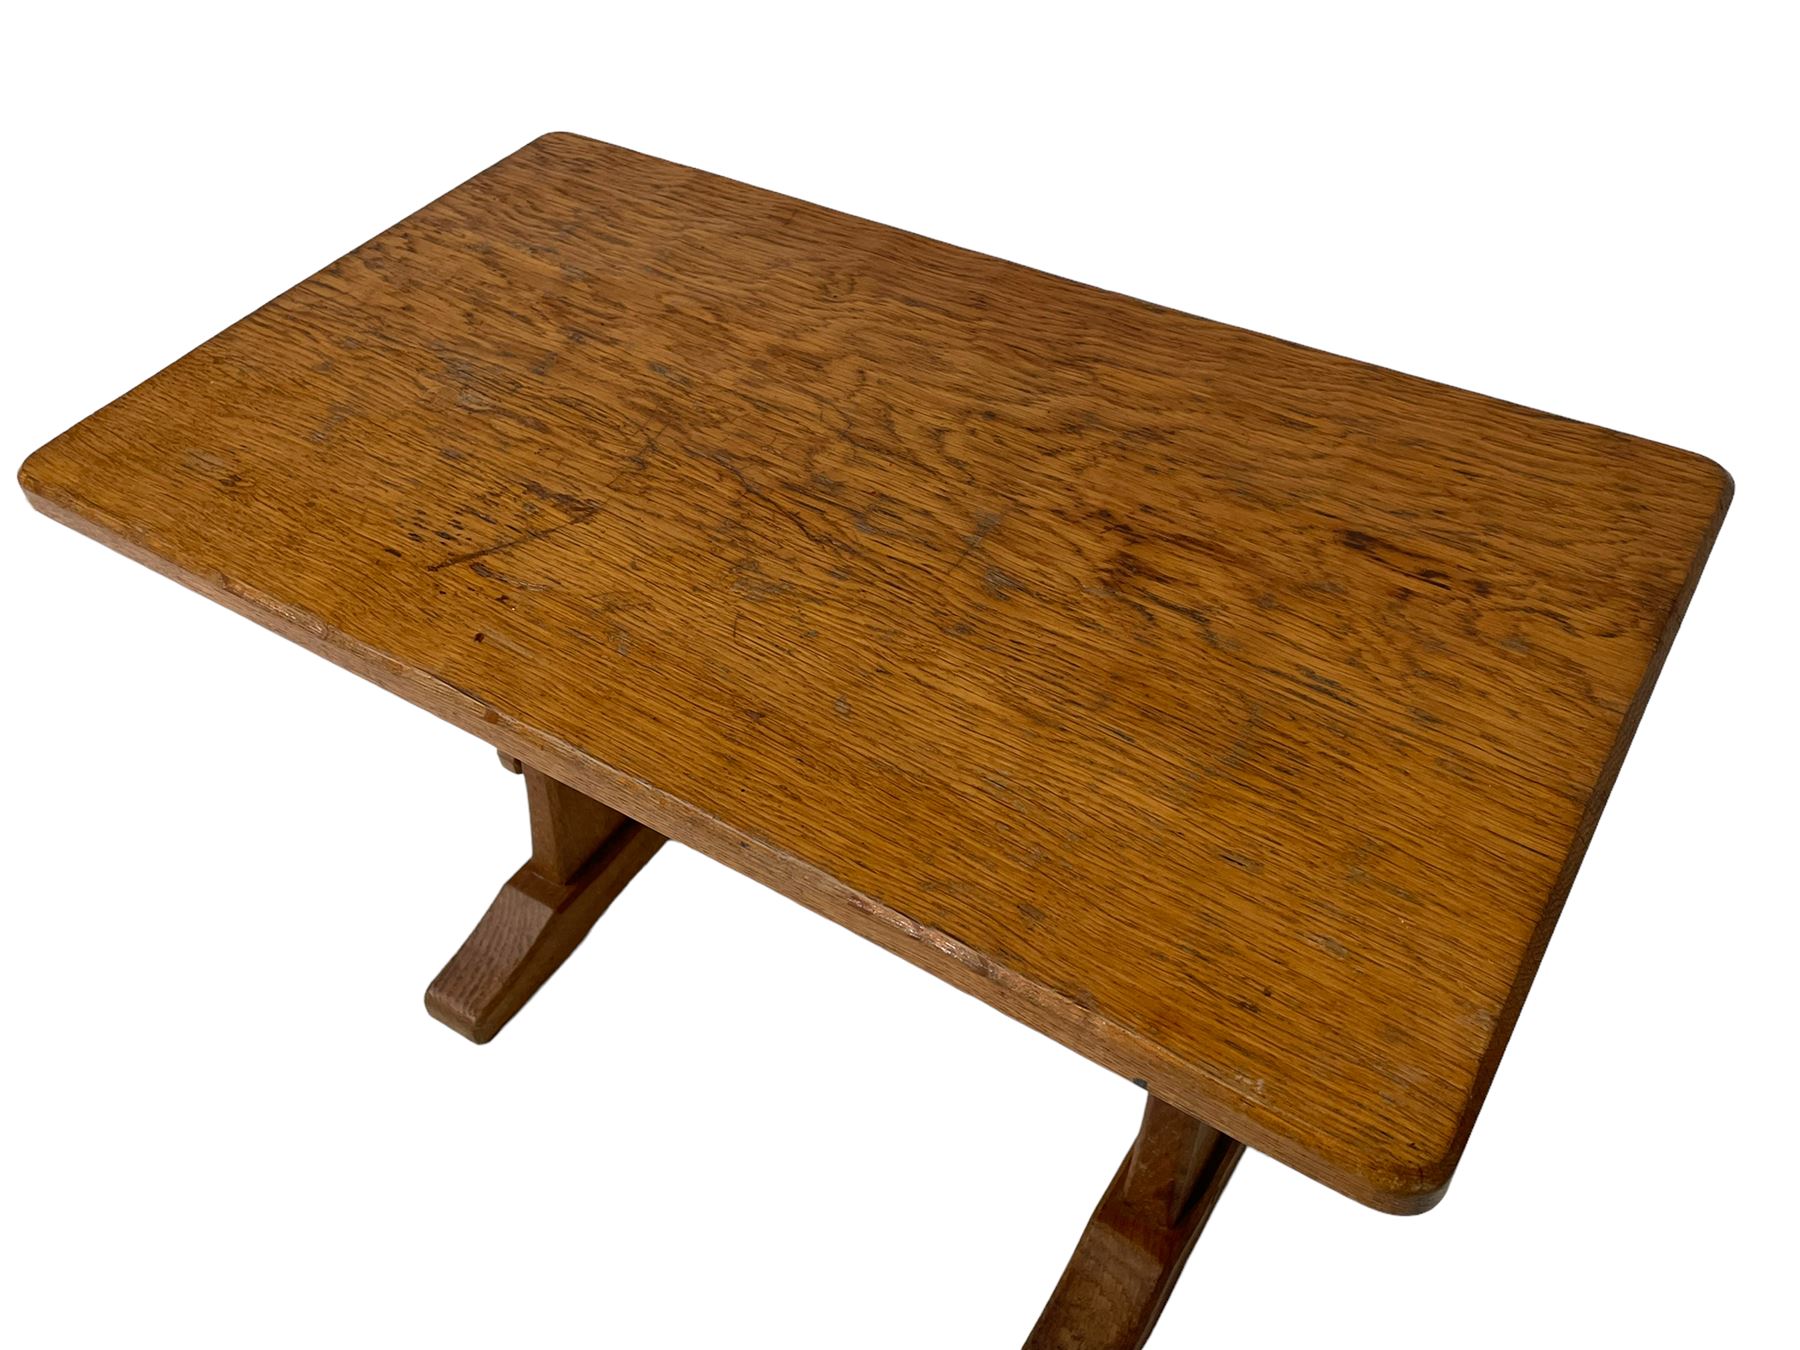 Acornman - rectangular adzed oak coffee table - Image 8 of 8